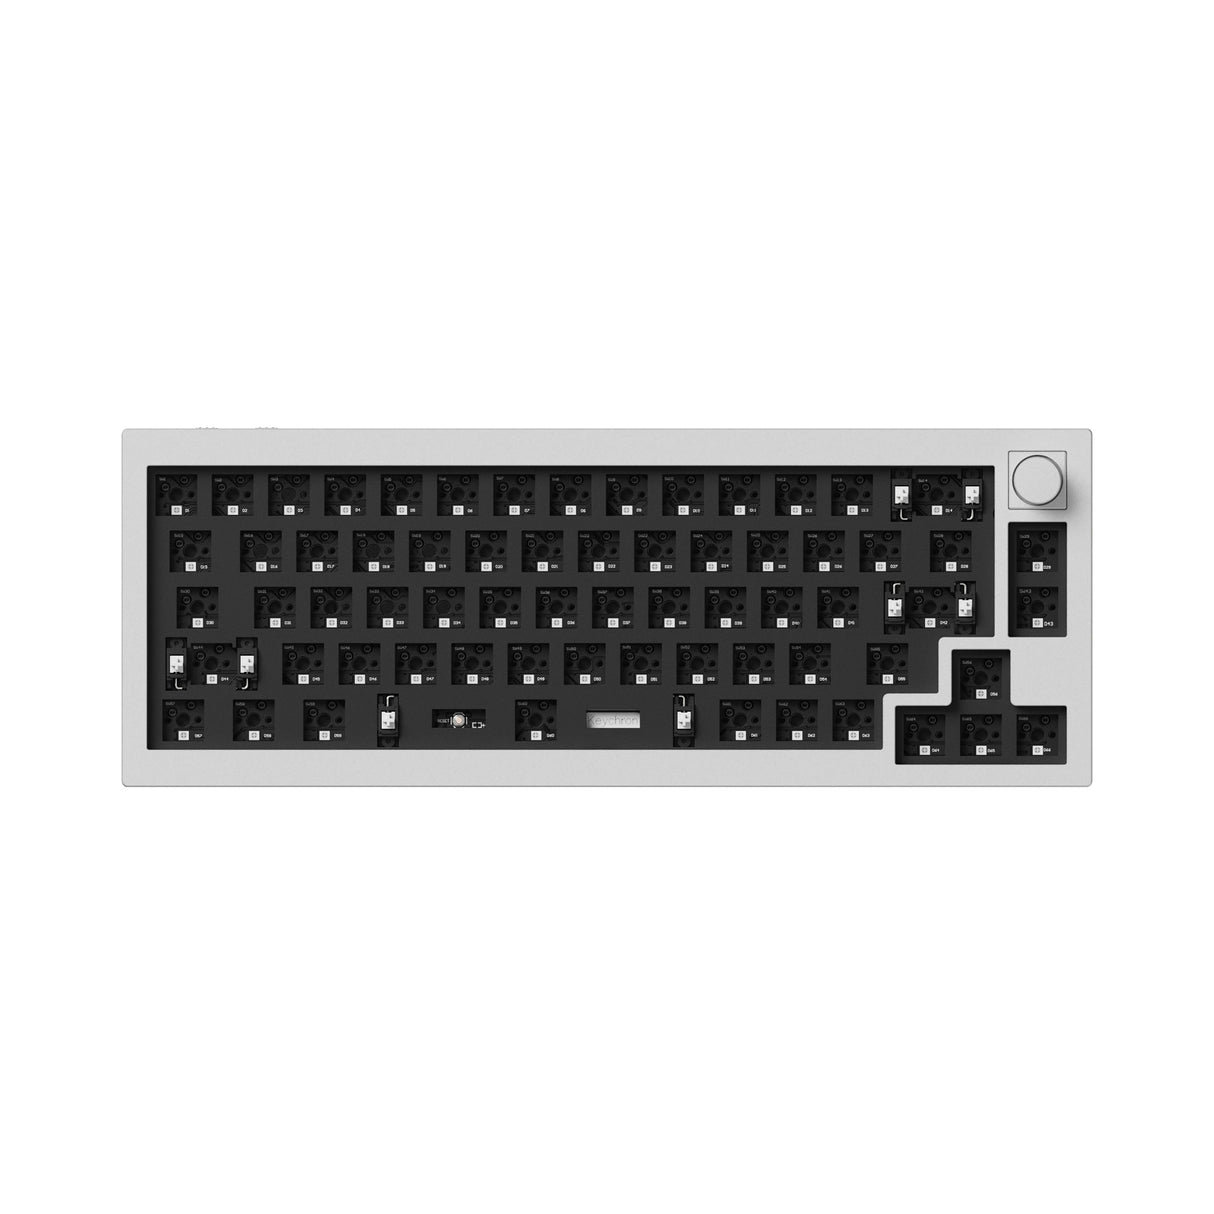 Keychron Q2 Pro QMK/VIA wireless custom mechanical keyboard 65 percent layout full aluminum grey frame for Mac WIndows Linux with RGB backlight and hot-swappable barebone knob